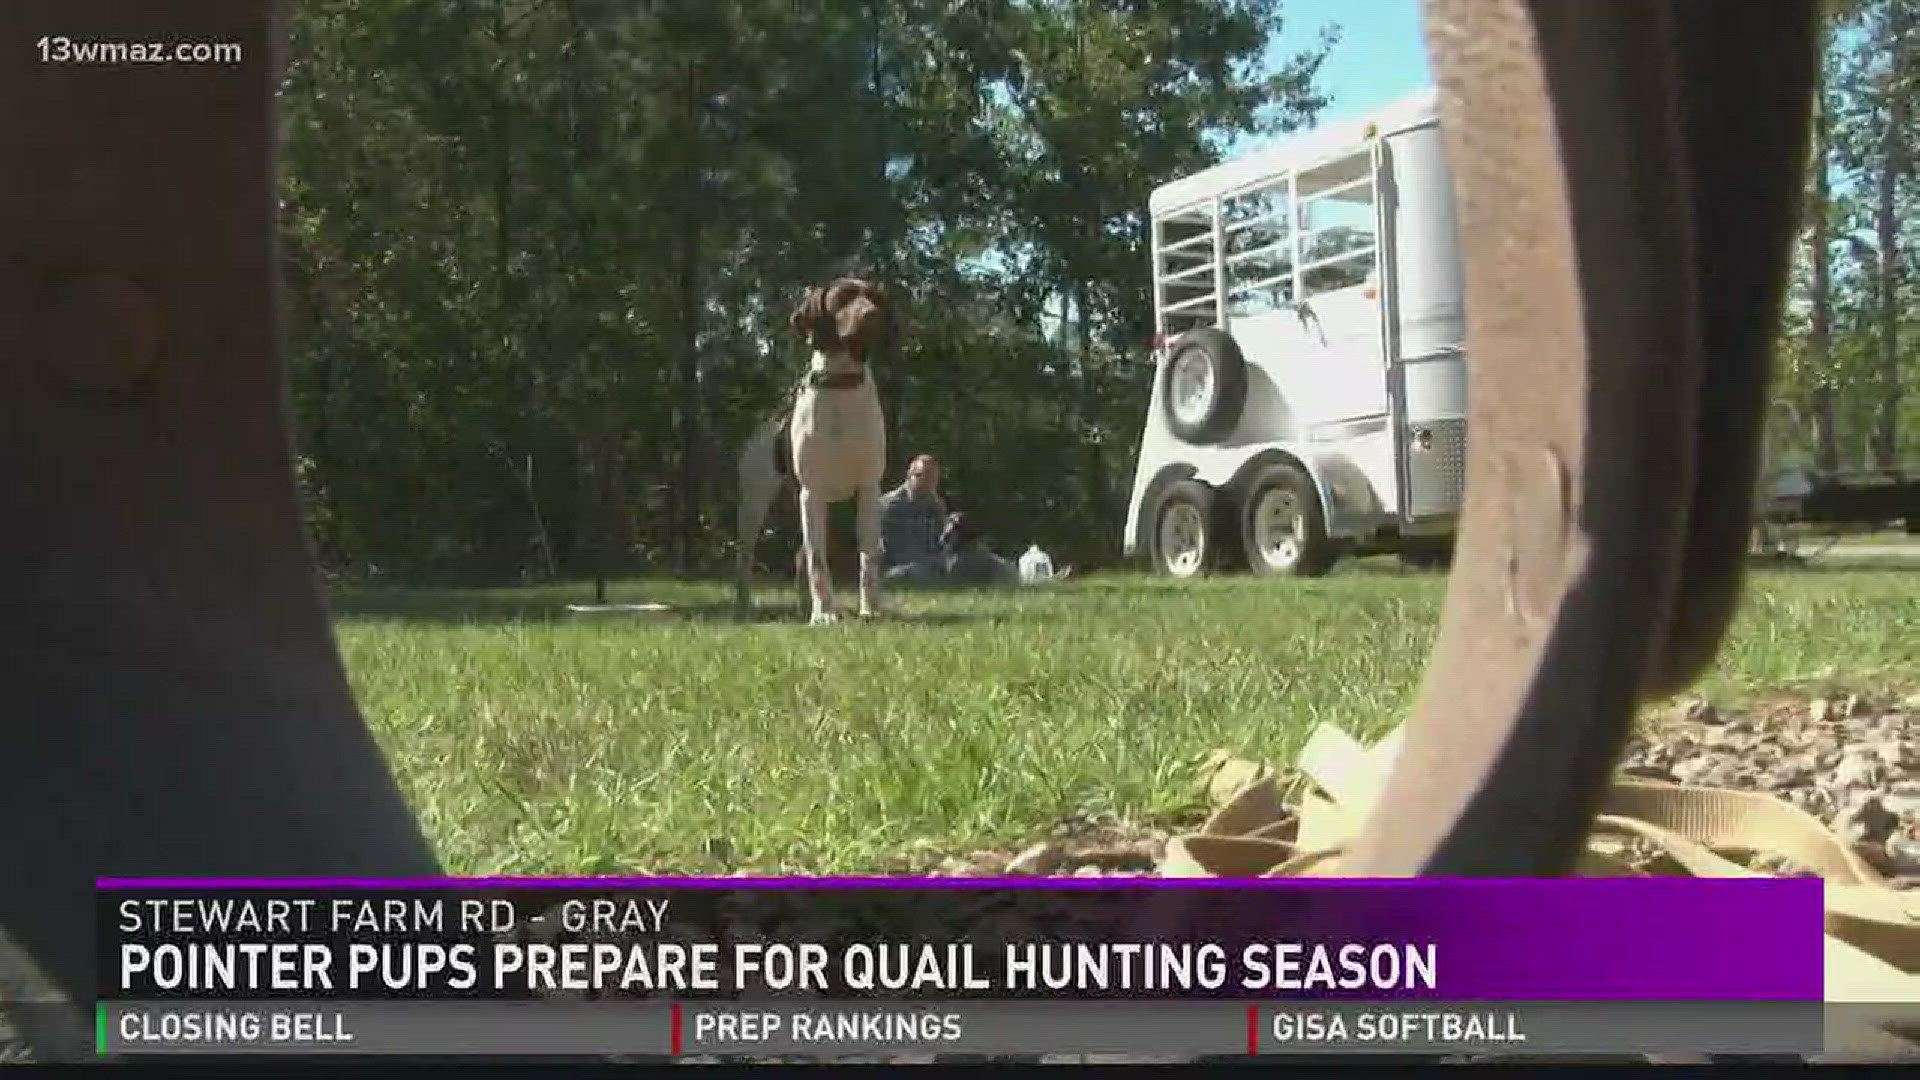 Pointer pups prepare for quail hunting season